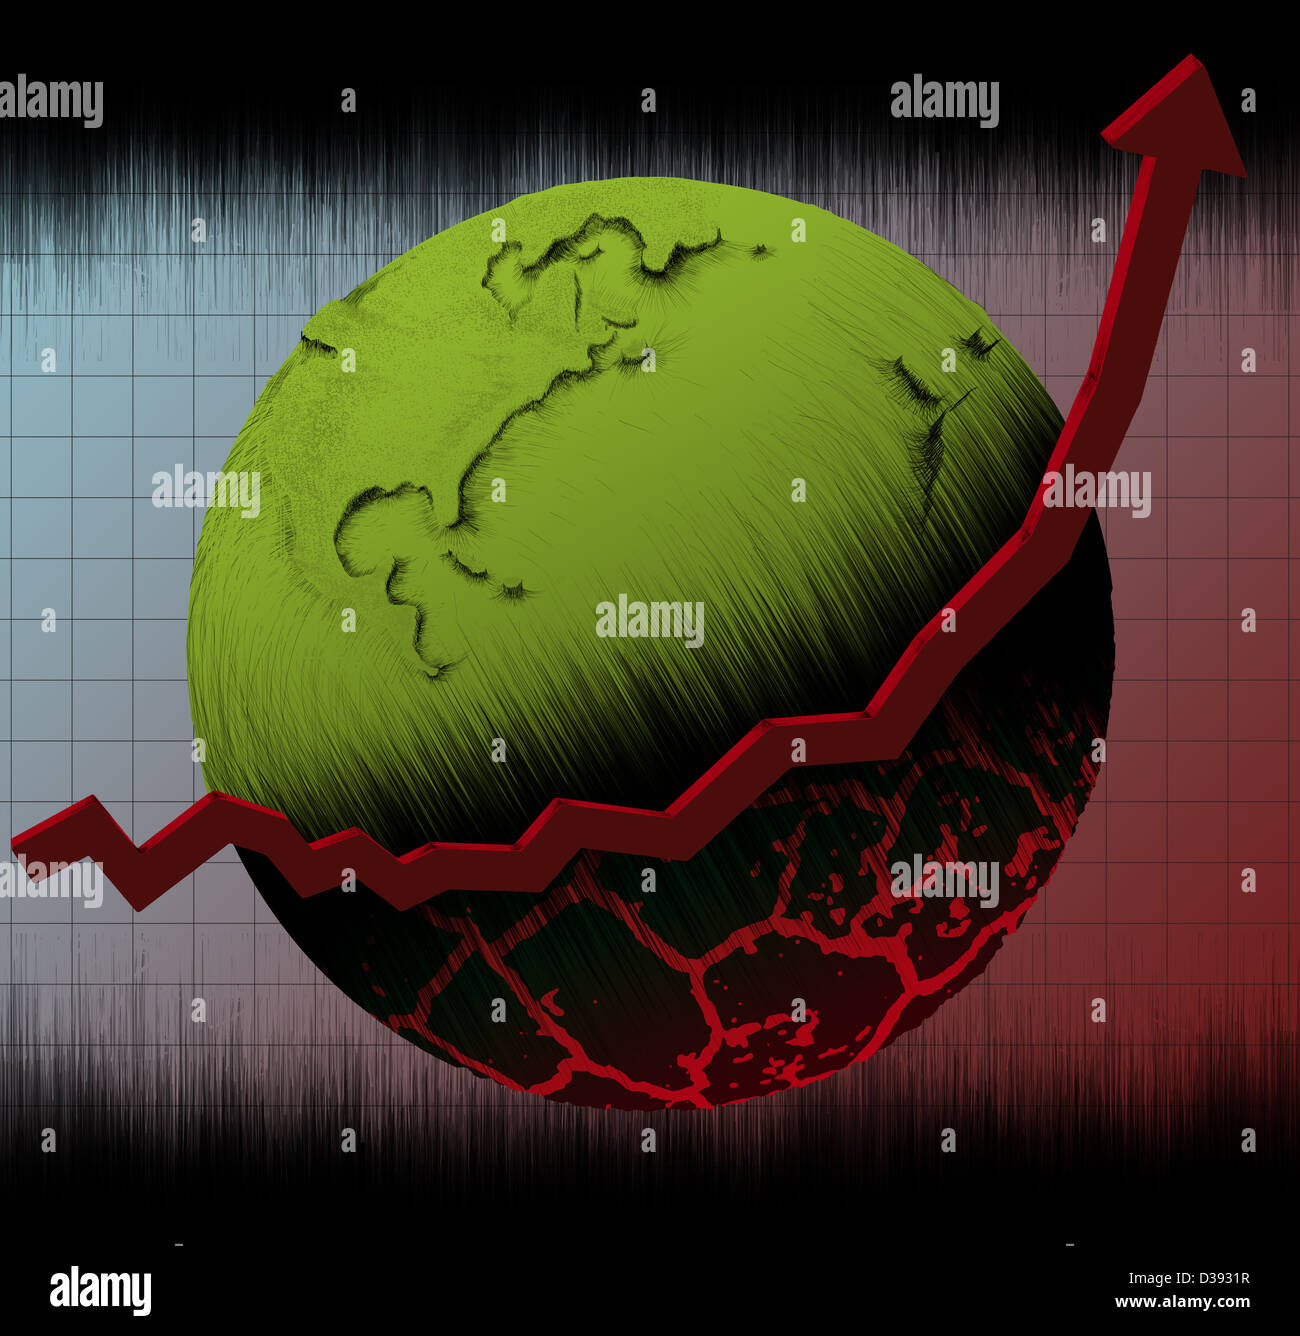 Illustrative representation showing rising danger level on earth Stock Photo